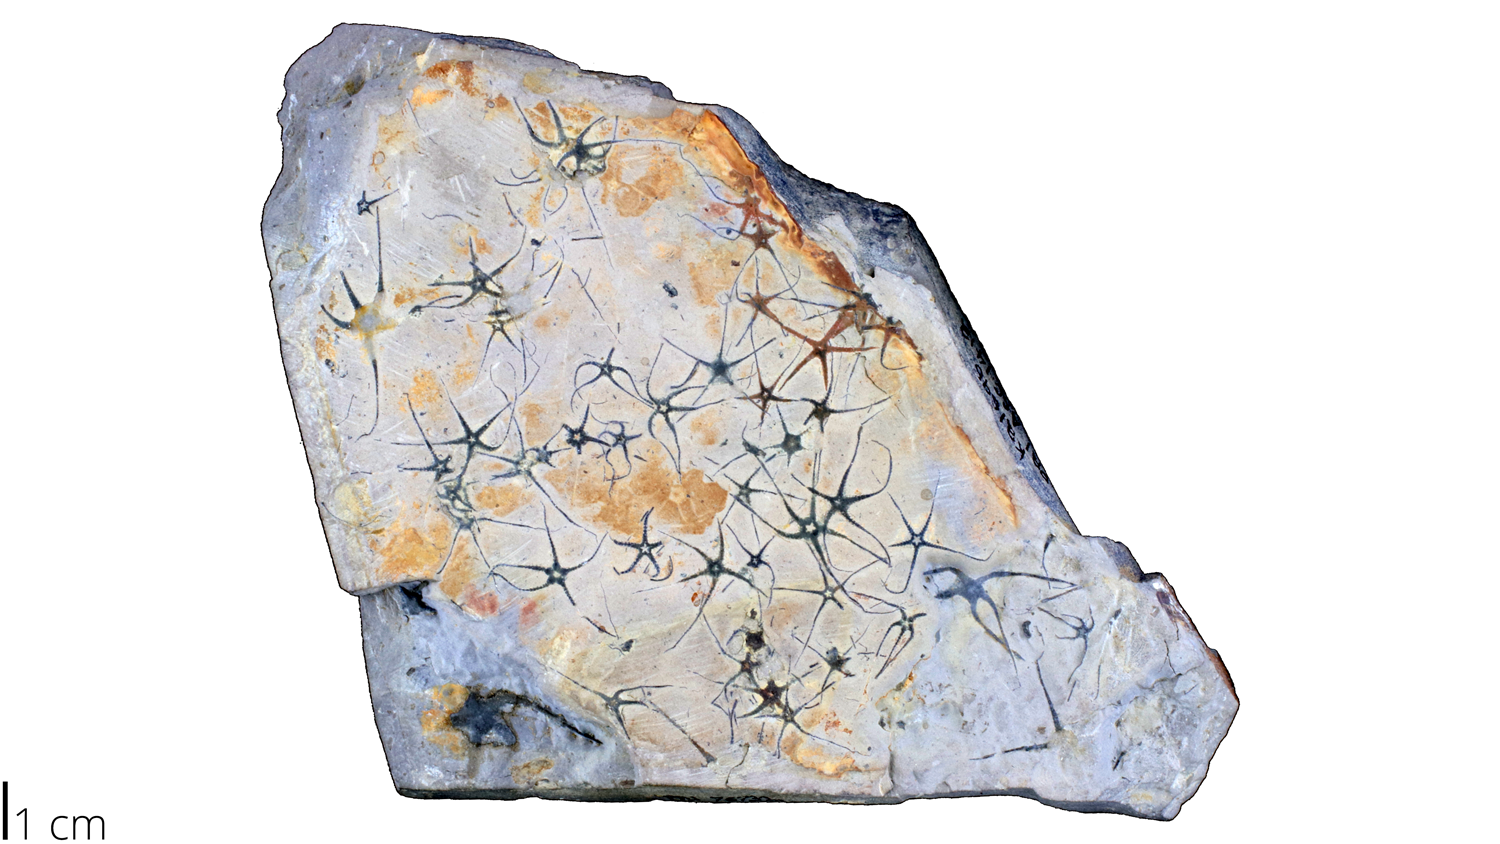 Photograph of a specimen rock slab full of brittle stars